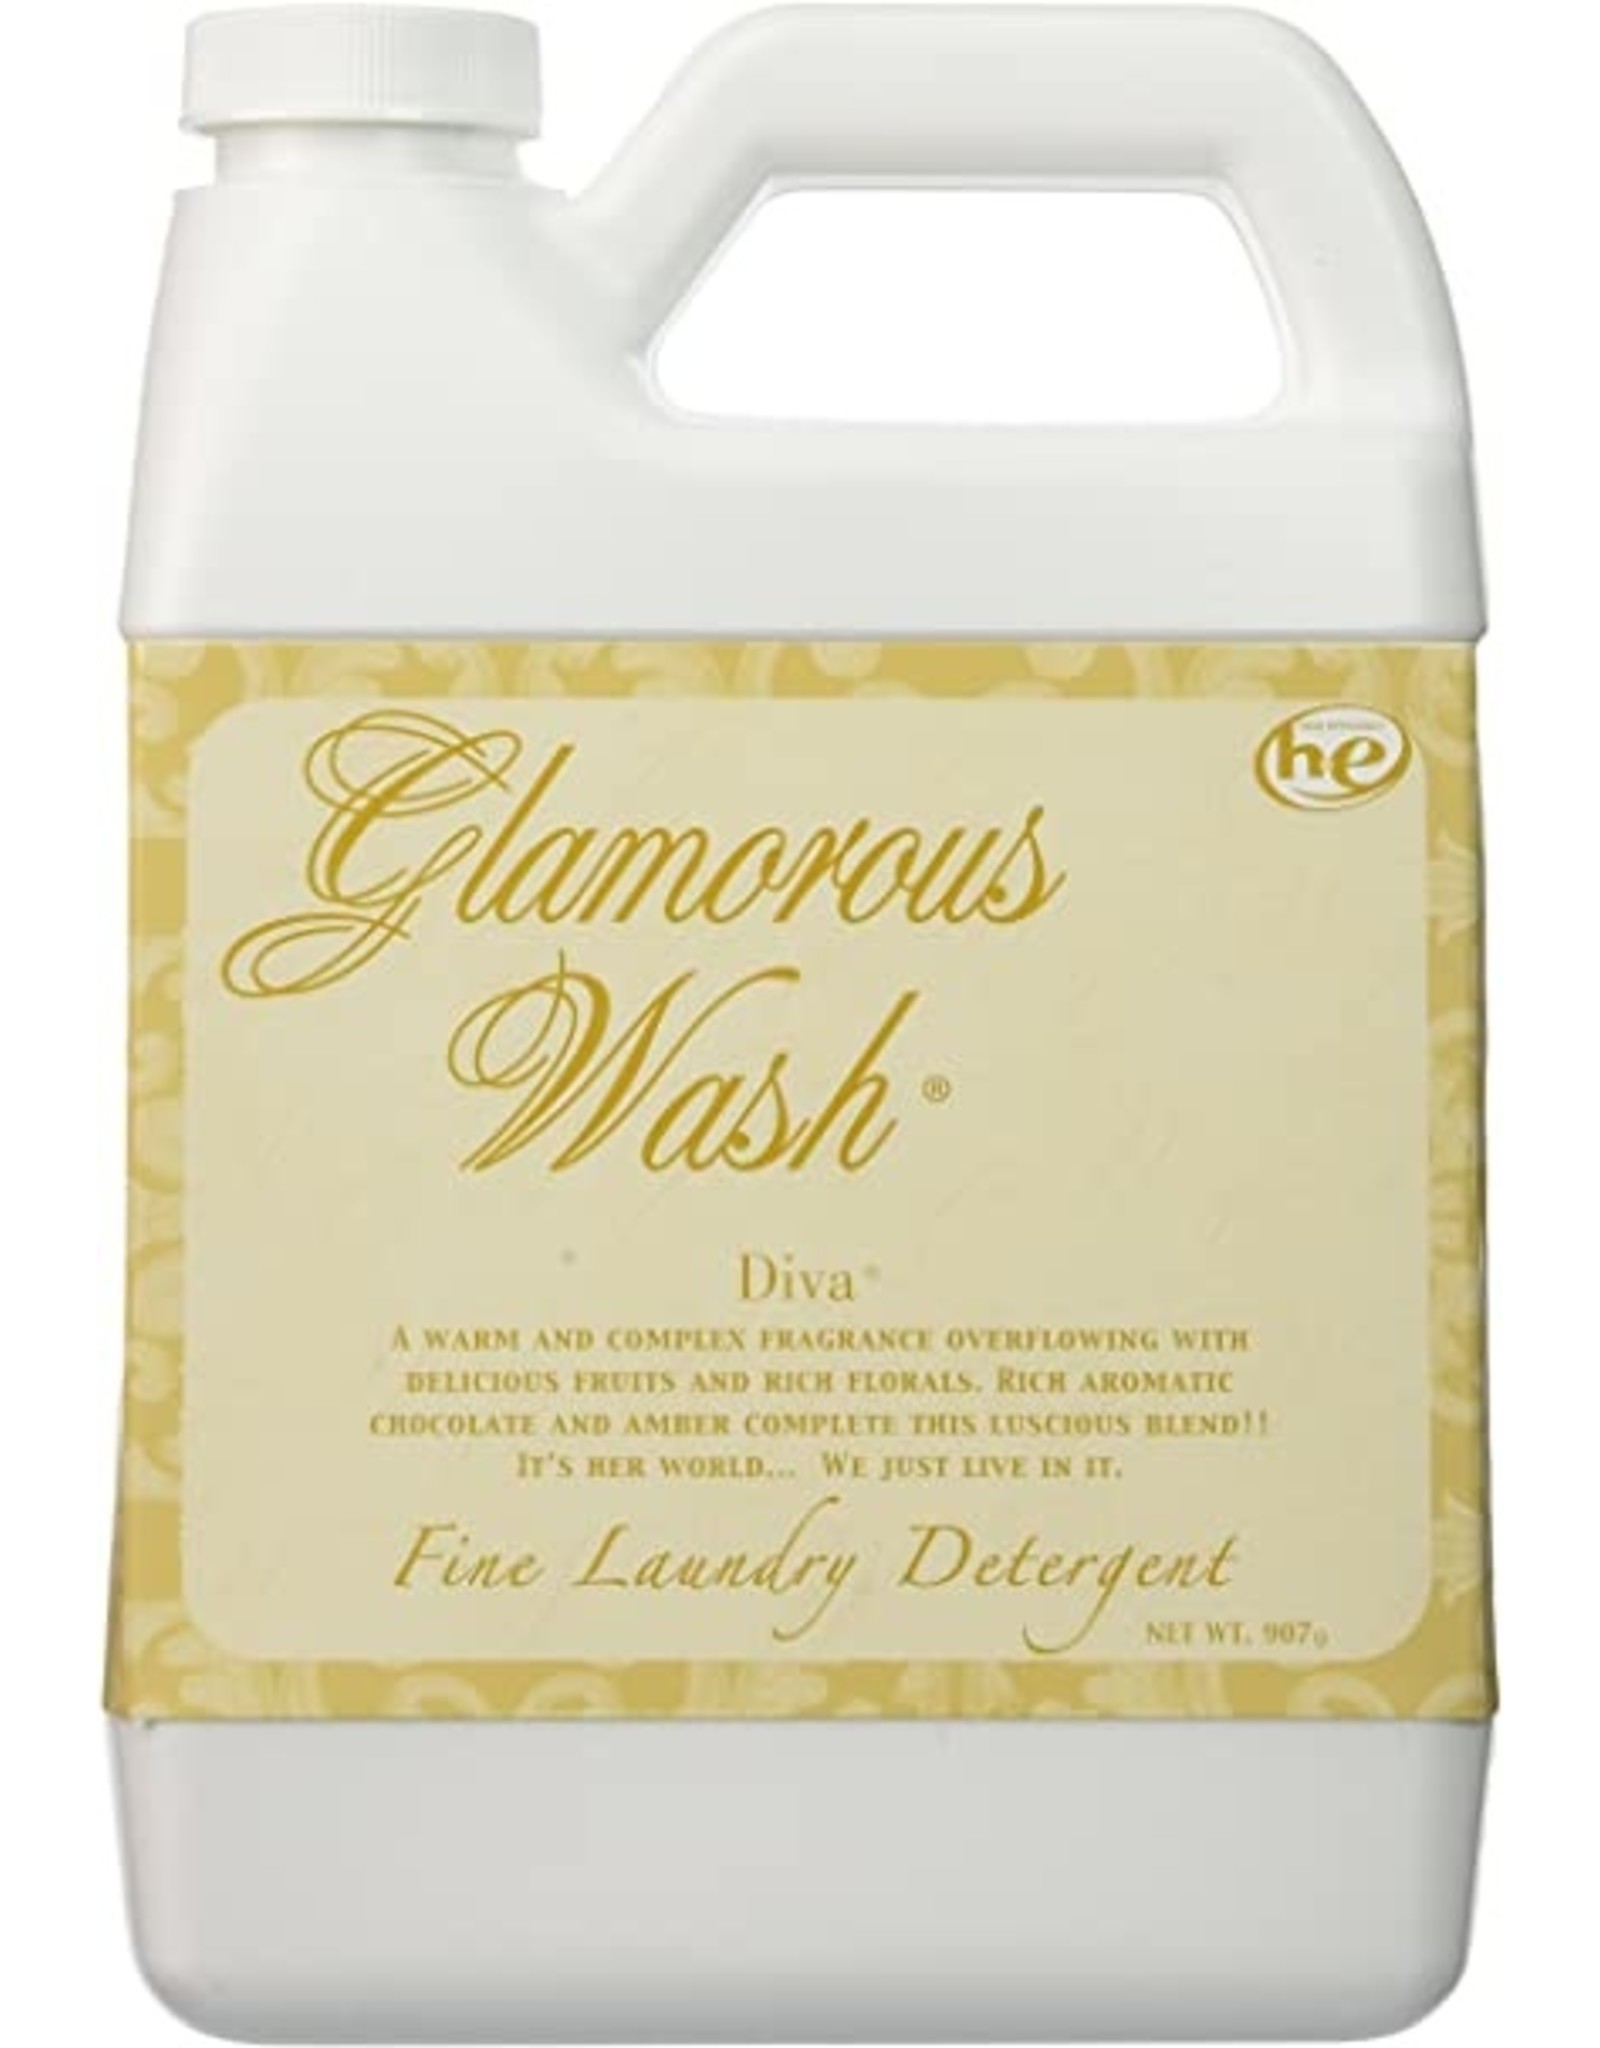 Tyler Diva Glamorous Wash 907g